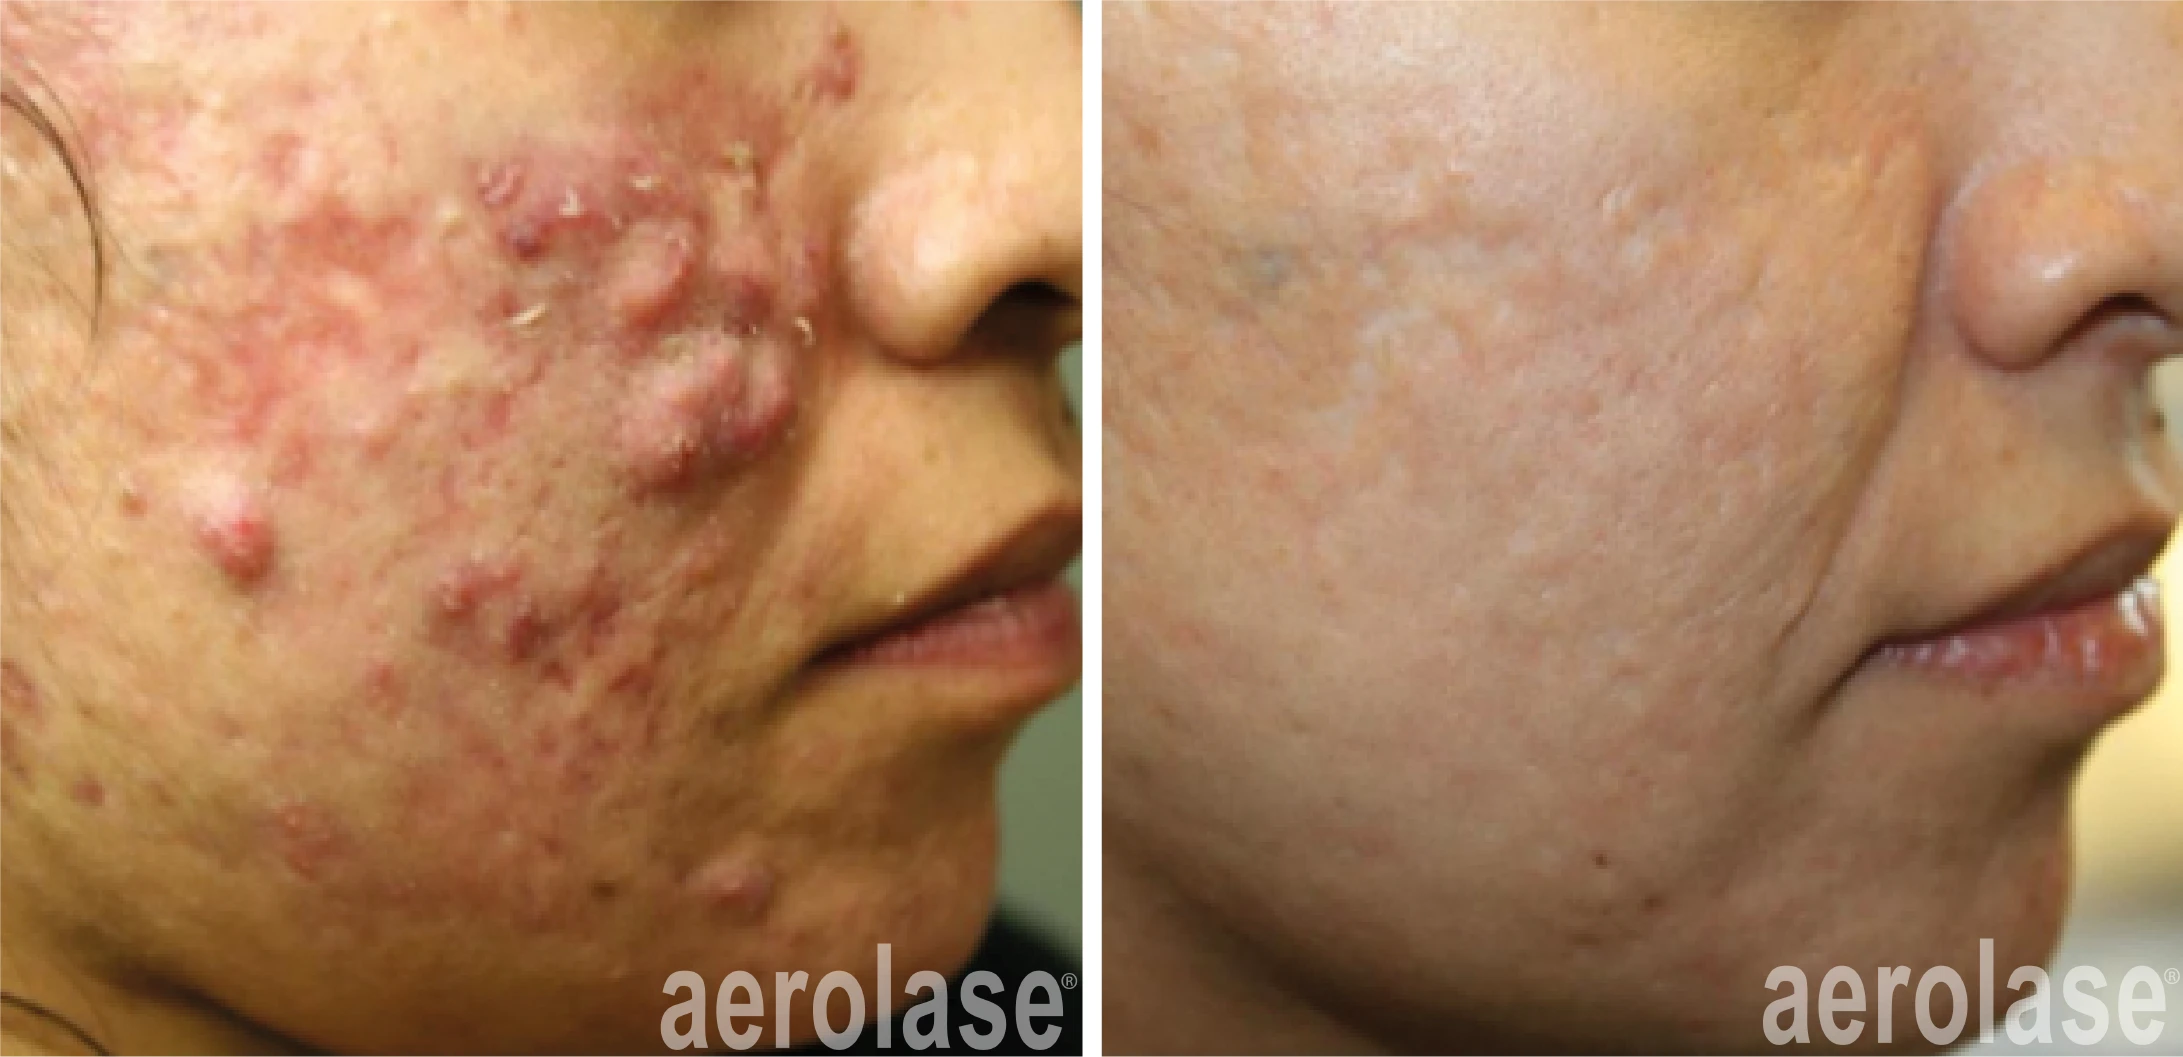 aerolase-michael-gold-acne-5-treatments